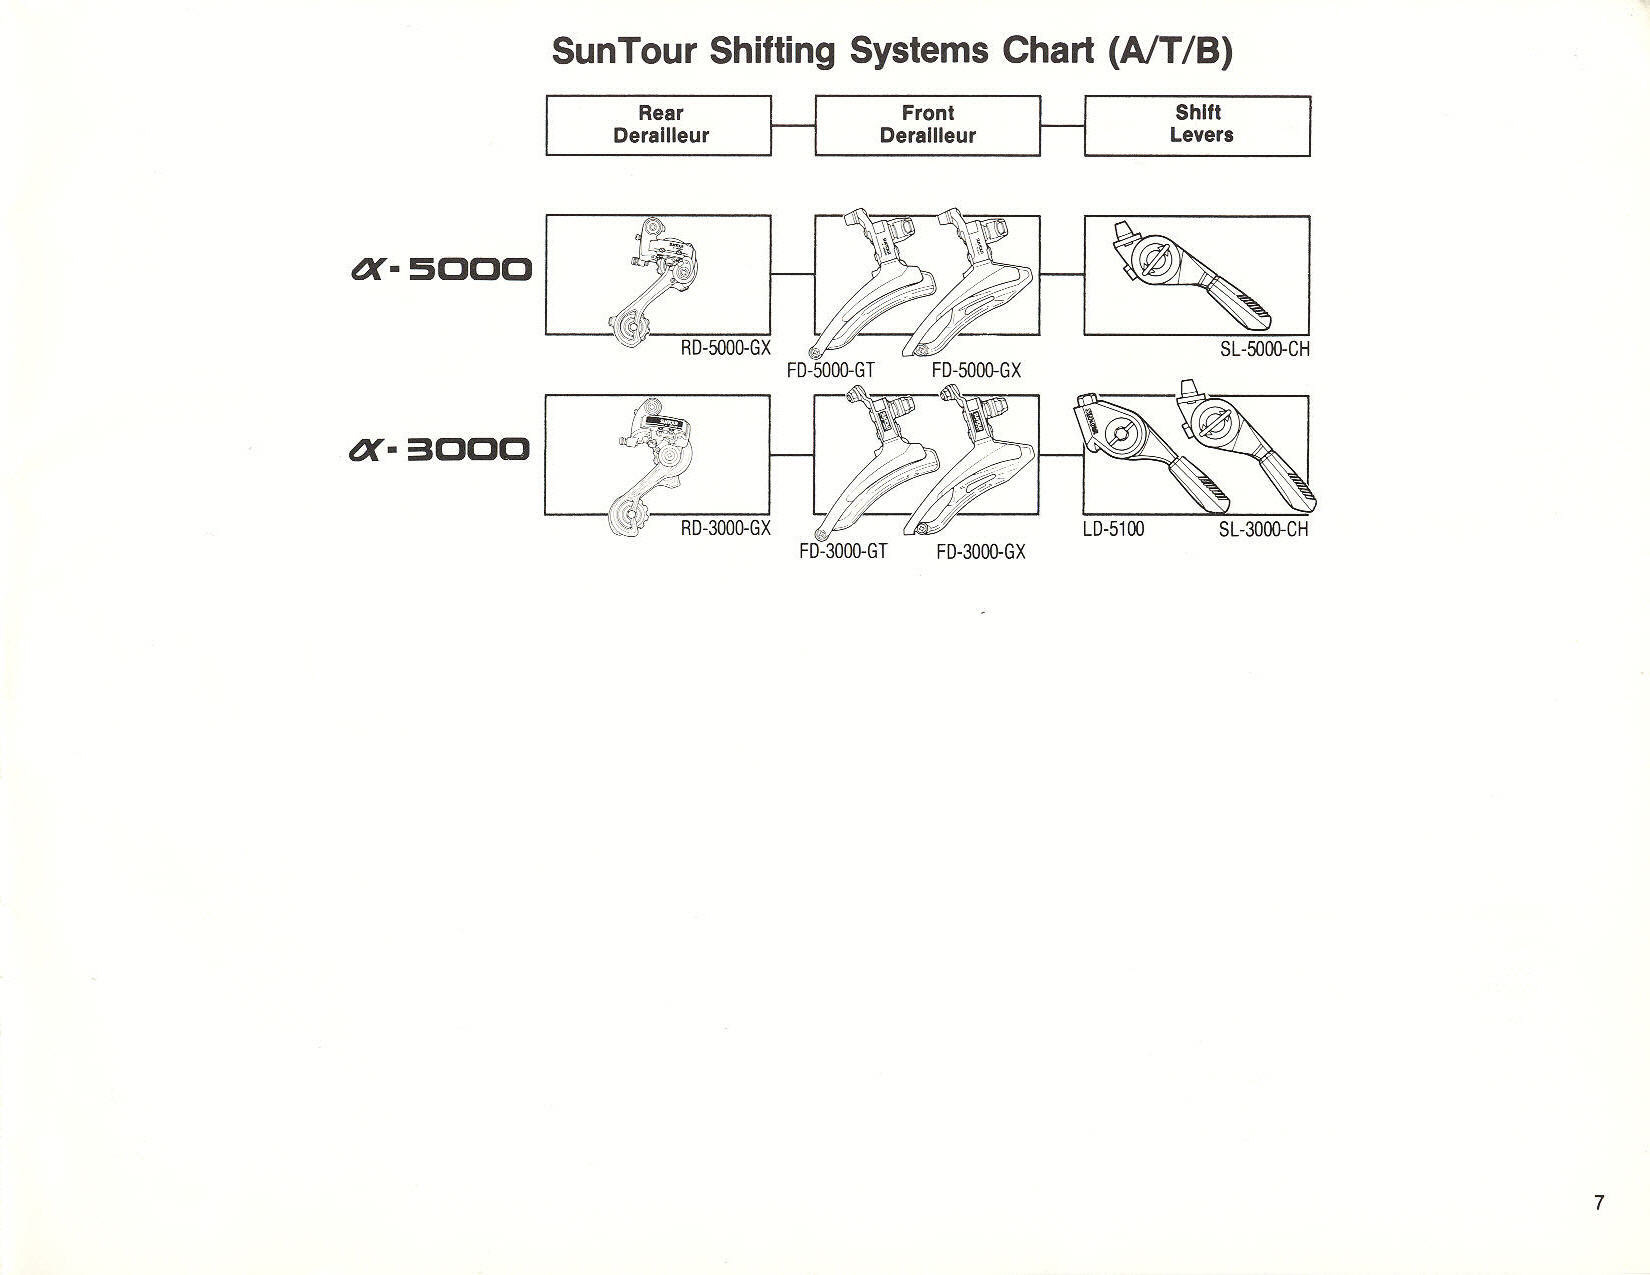 SunTour dealer catalog (1987)